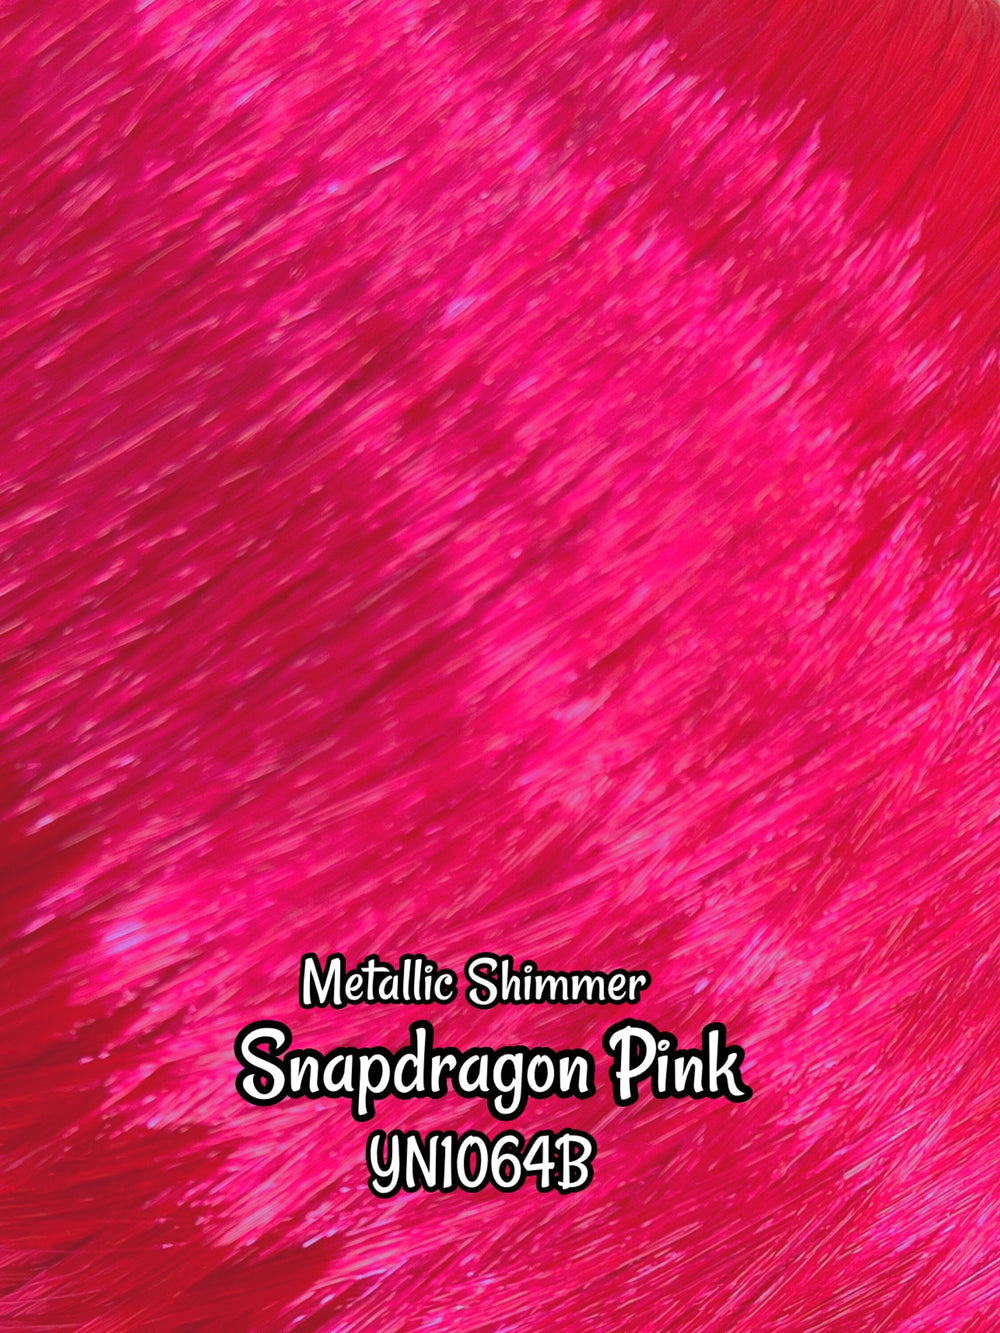 DG-HQ™ Nylon Metallic Shimmer Snapdragon Pink YN1064B 36 inch 1oz/28g hank Hot pink Doll Hair for rerooting fashion dolls